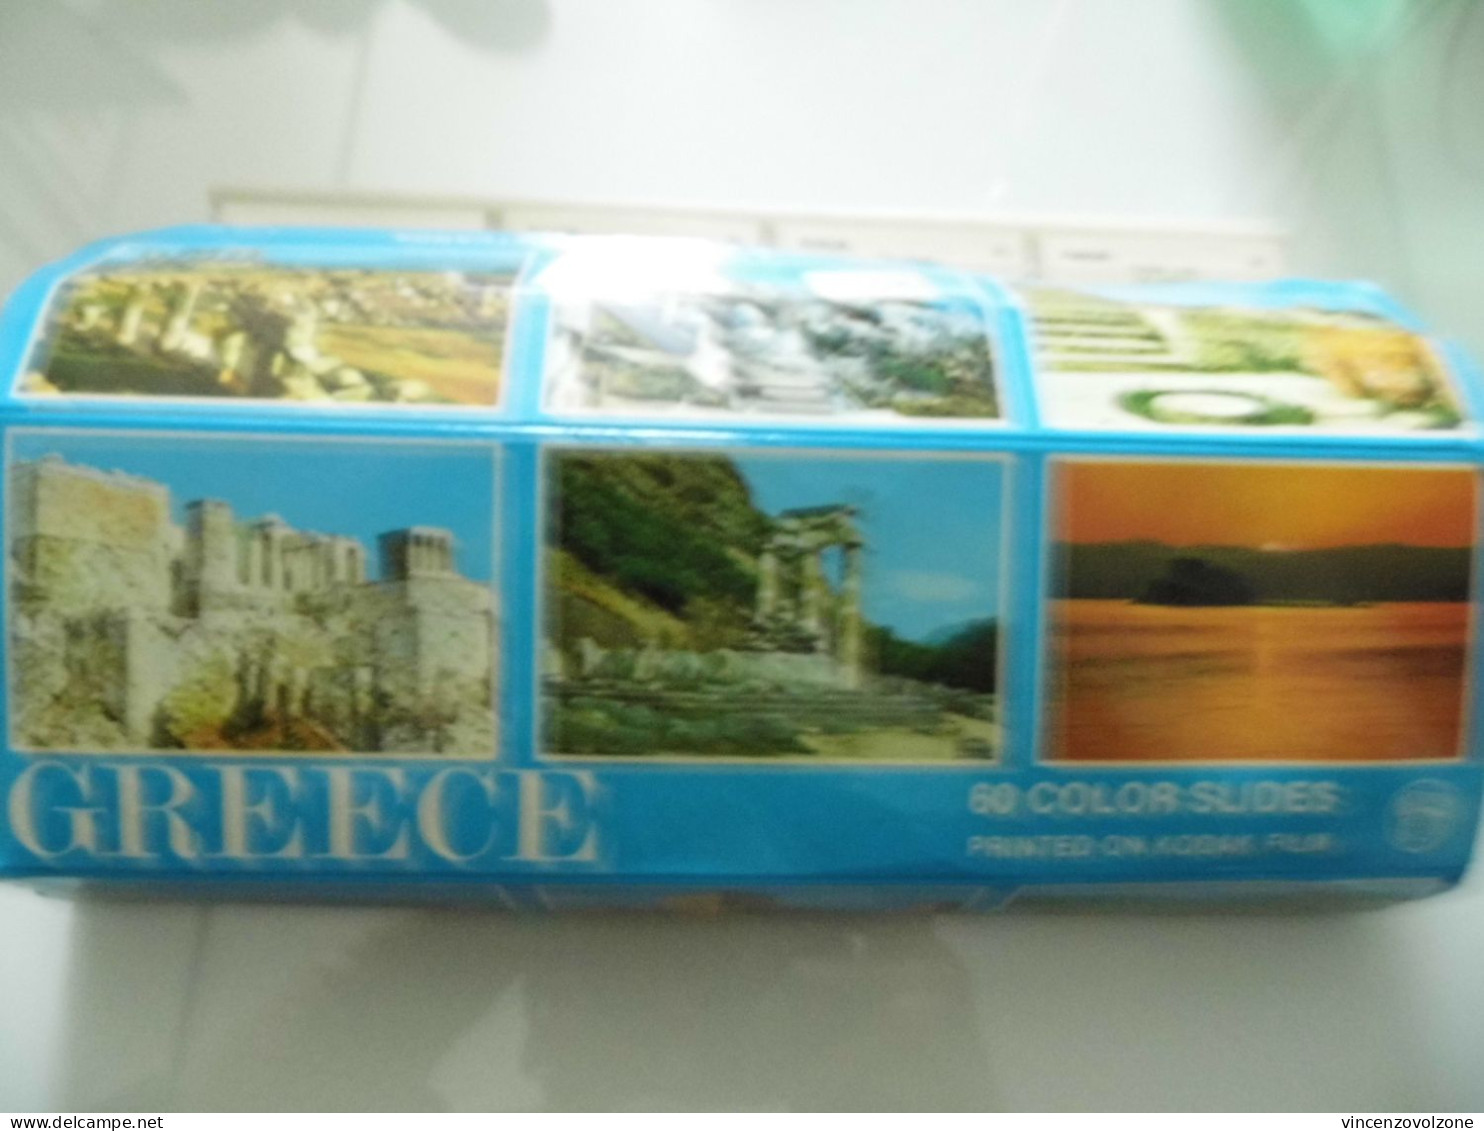 Souvenir Con Custodia  "GREECE 60 COLOR SLIDES" Delfi Editions., Athens Anni 1960 - Diapositives (slides)